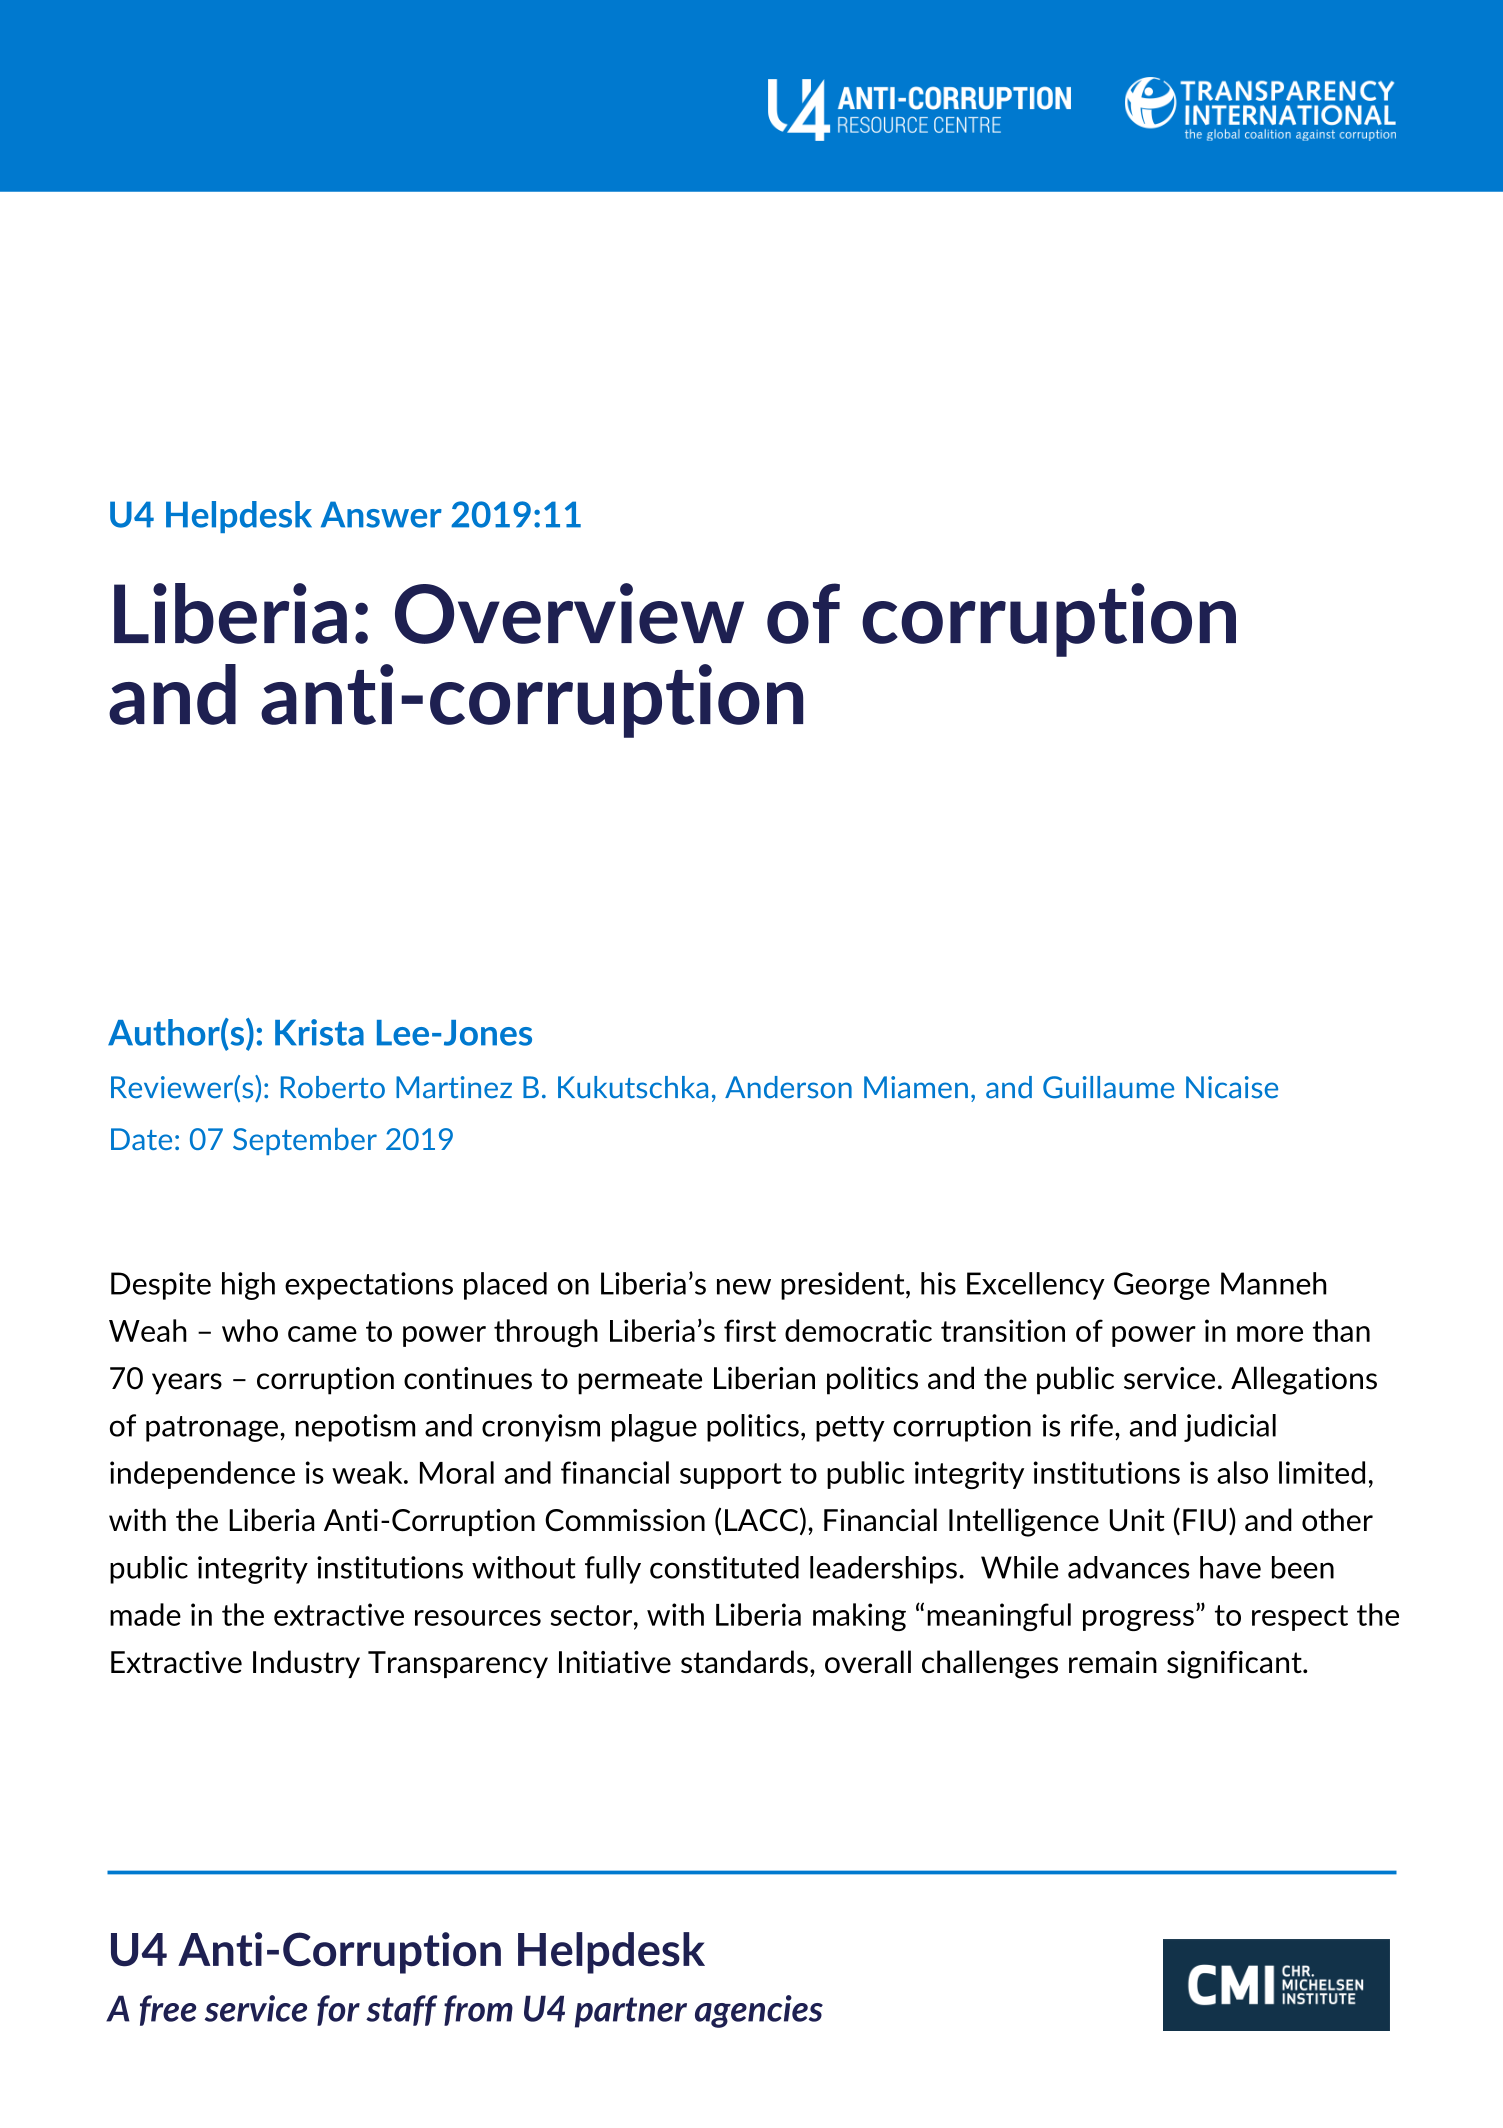 Liberia: Overview of corruption and anti-corruption